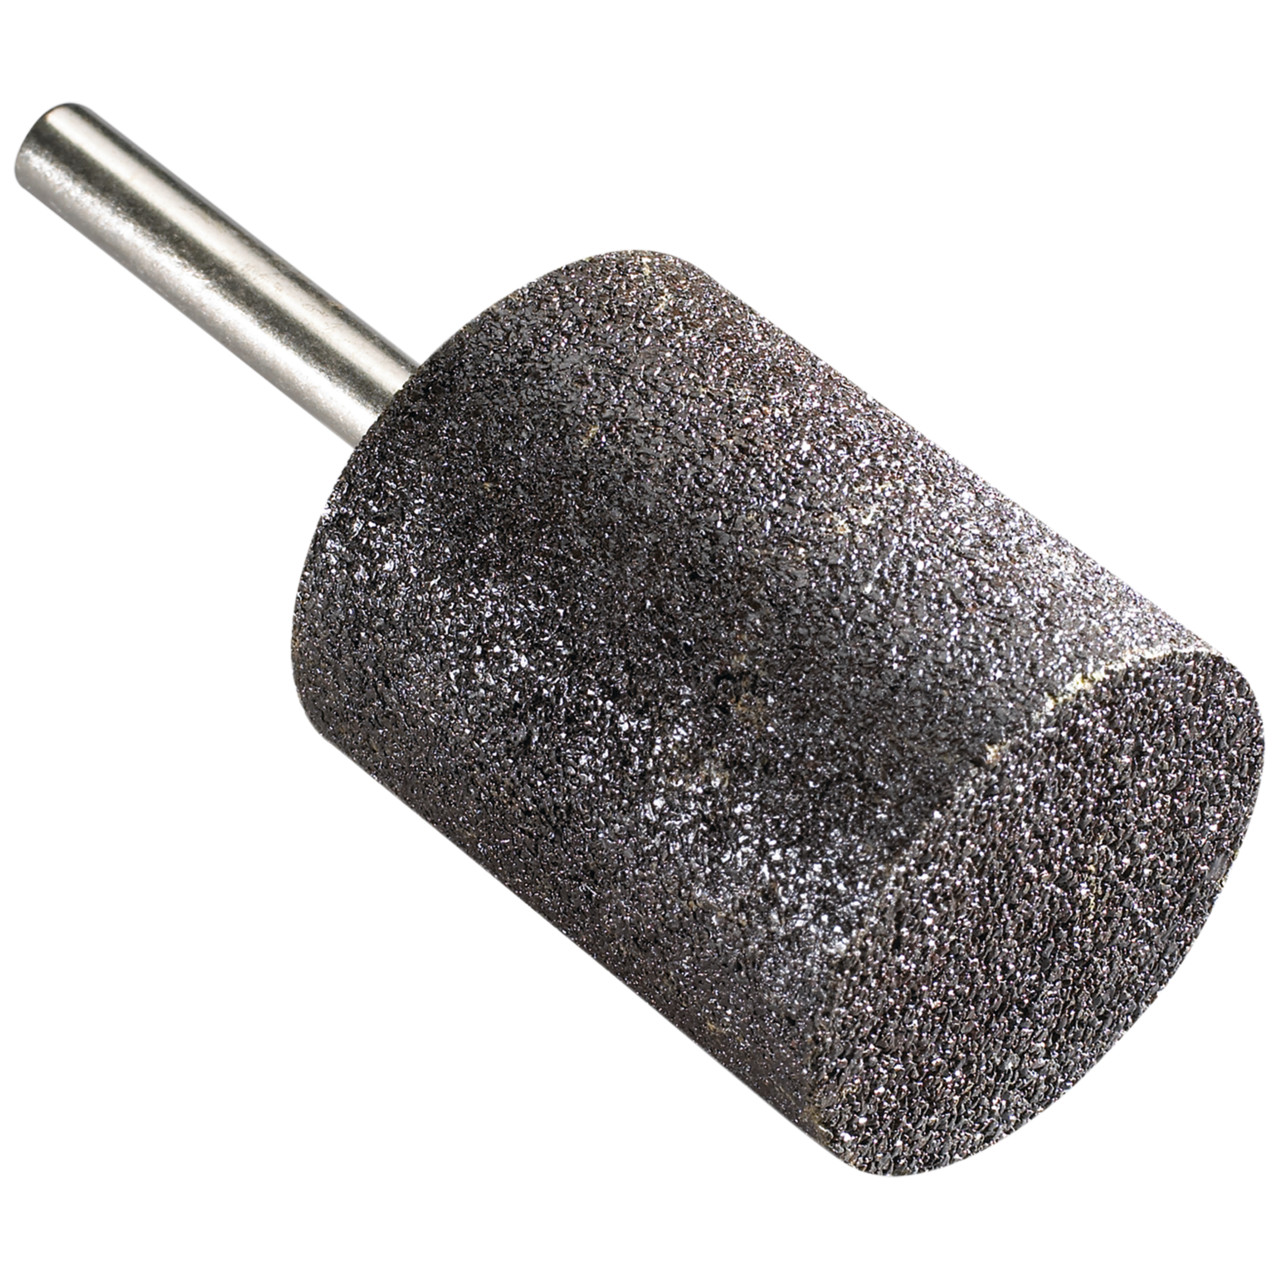 Tyrolit Punti montati in resina DxT-SxL 40x25-6x40 Per ghisa, forma: 52ZY - cilindro (punto montato), Art. 123696